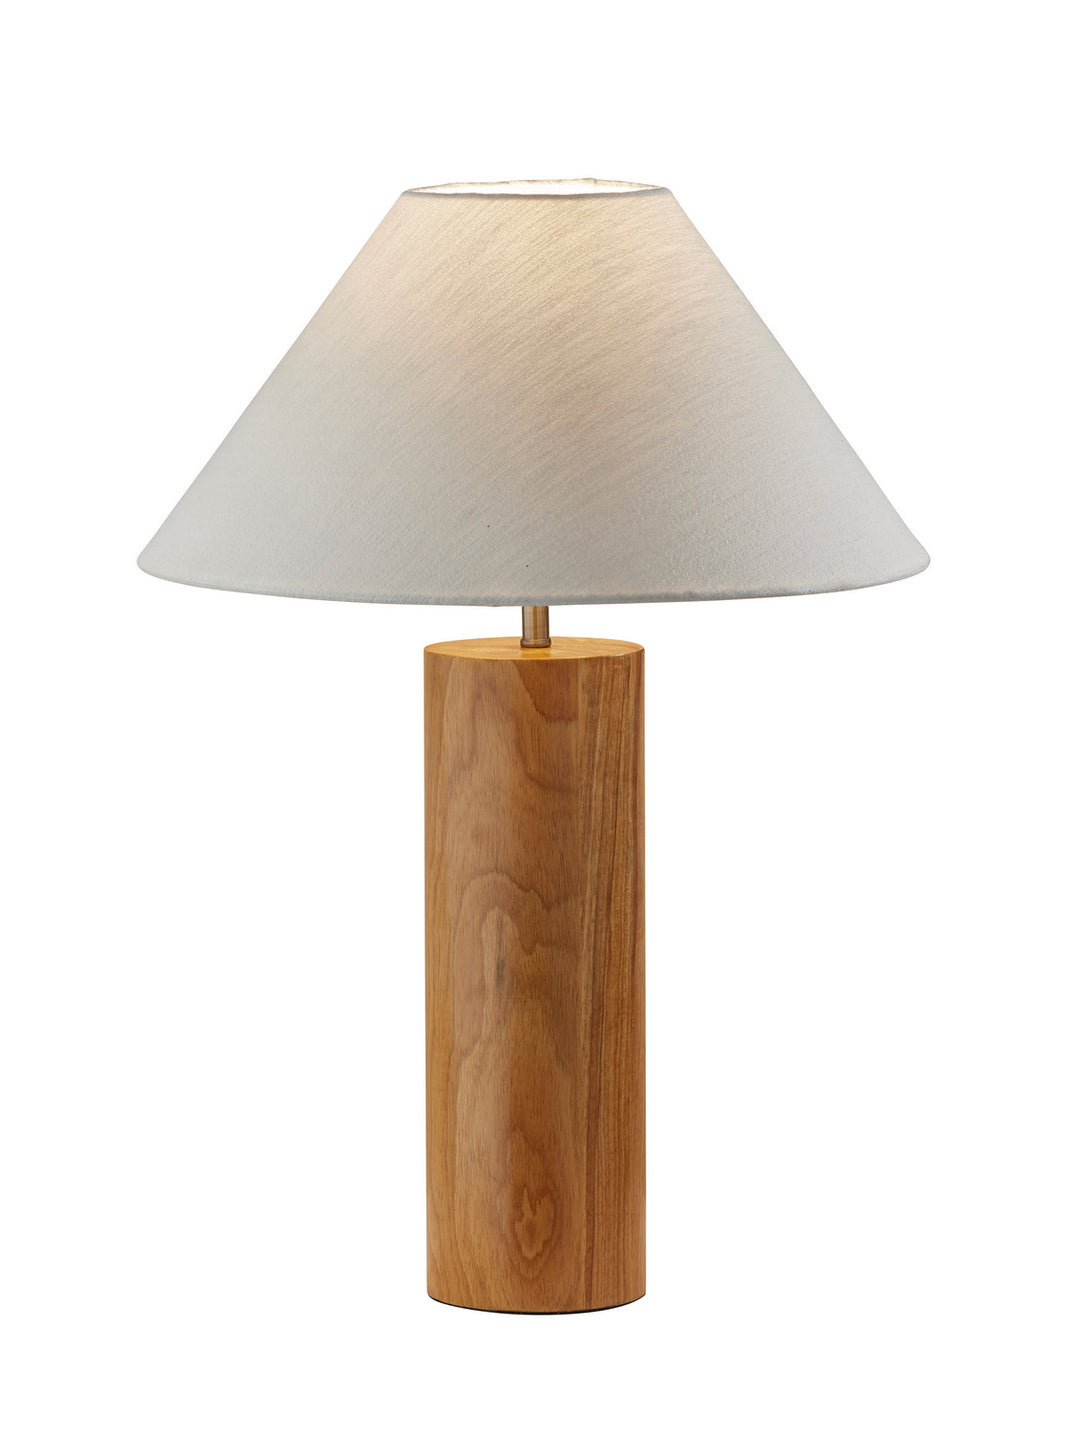 Adesso Home 1509-12  Martin Lamp Natural Oak Wood W. Antique Brass Accent